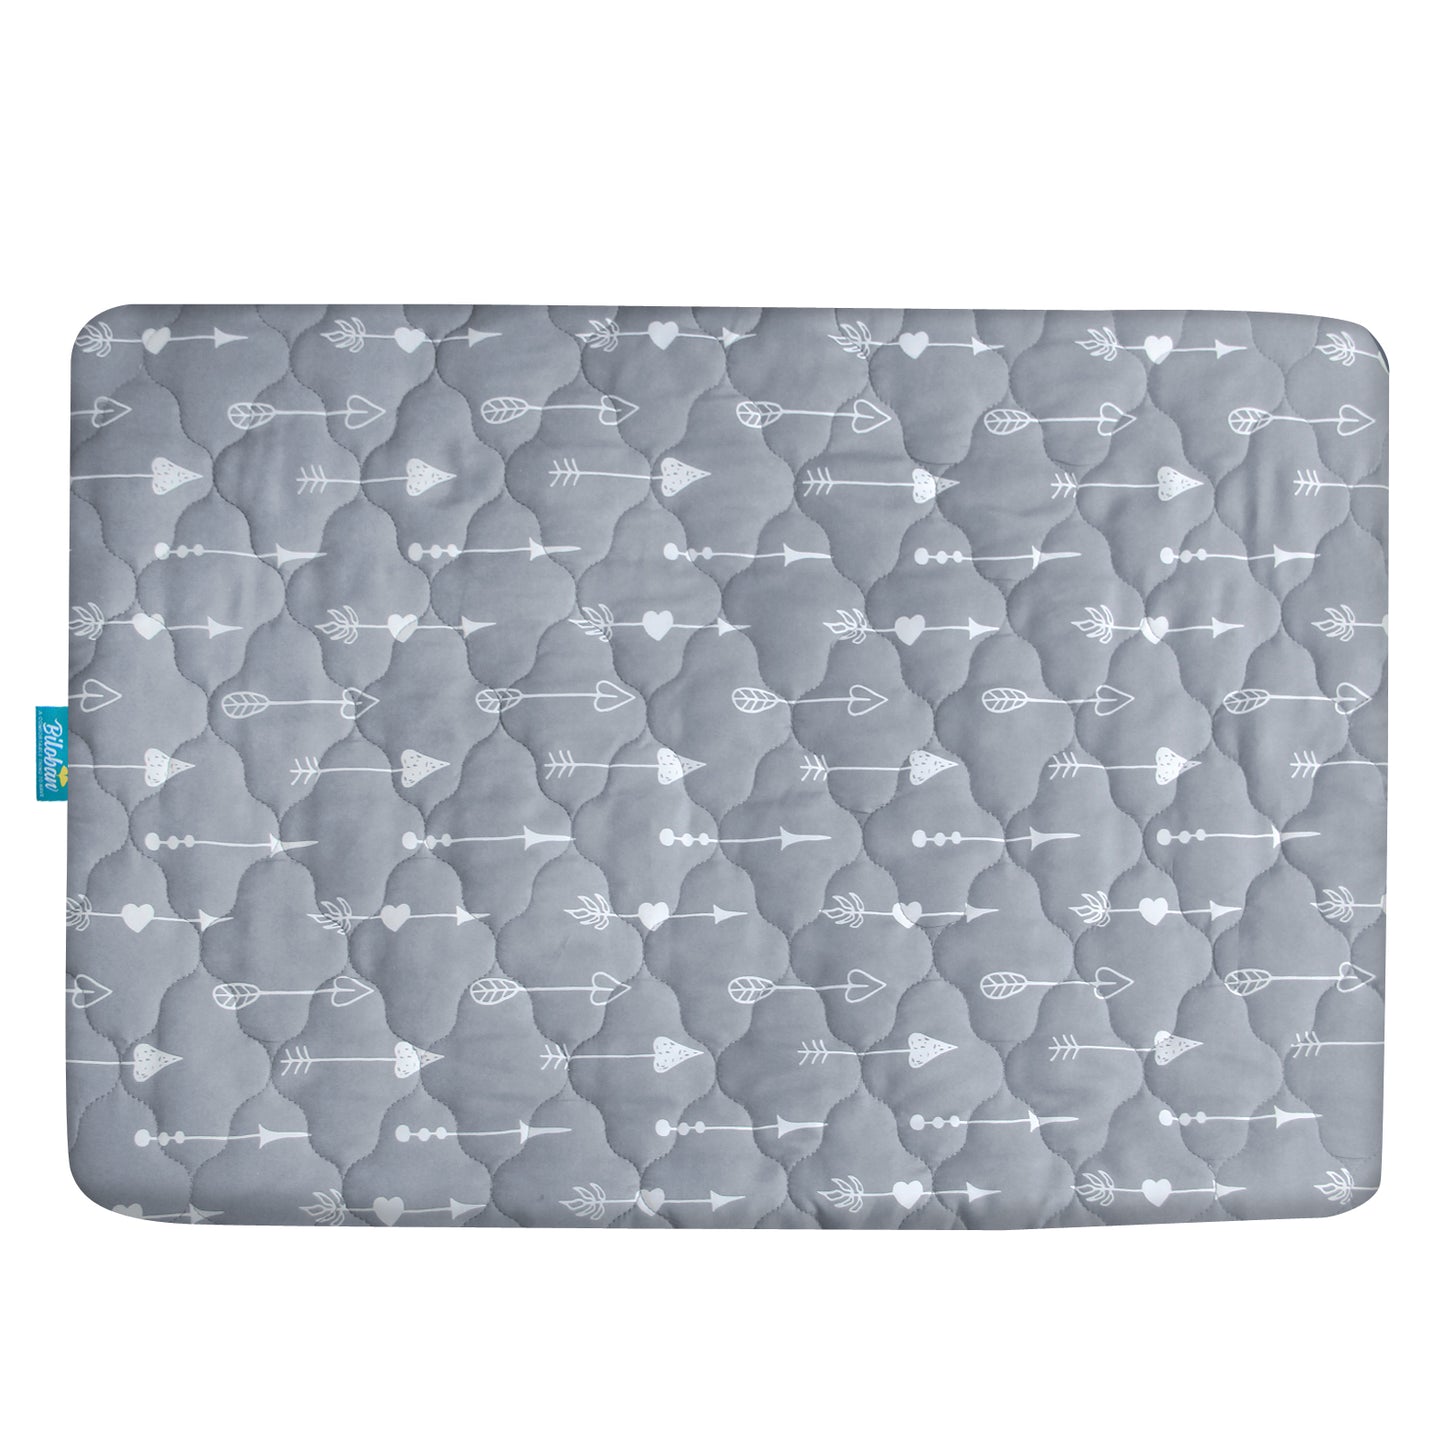 Pack N Play Mattress Pad Cover/ Protector - Ultra Soft Microfiber, Waterproof (for Standard Playpen/ Mini Crib) - Biloban Online Store